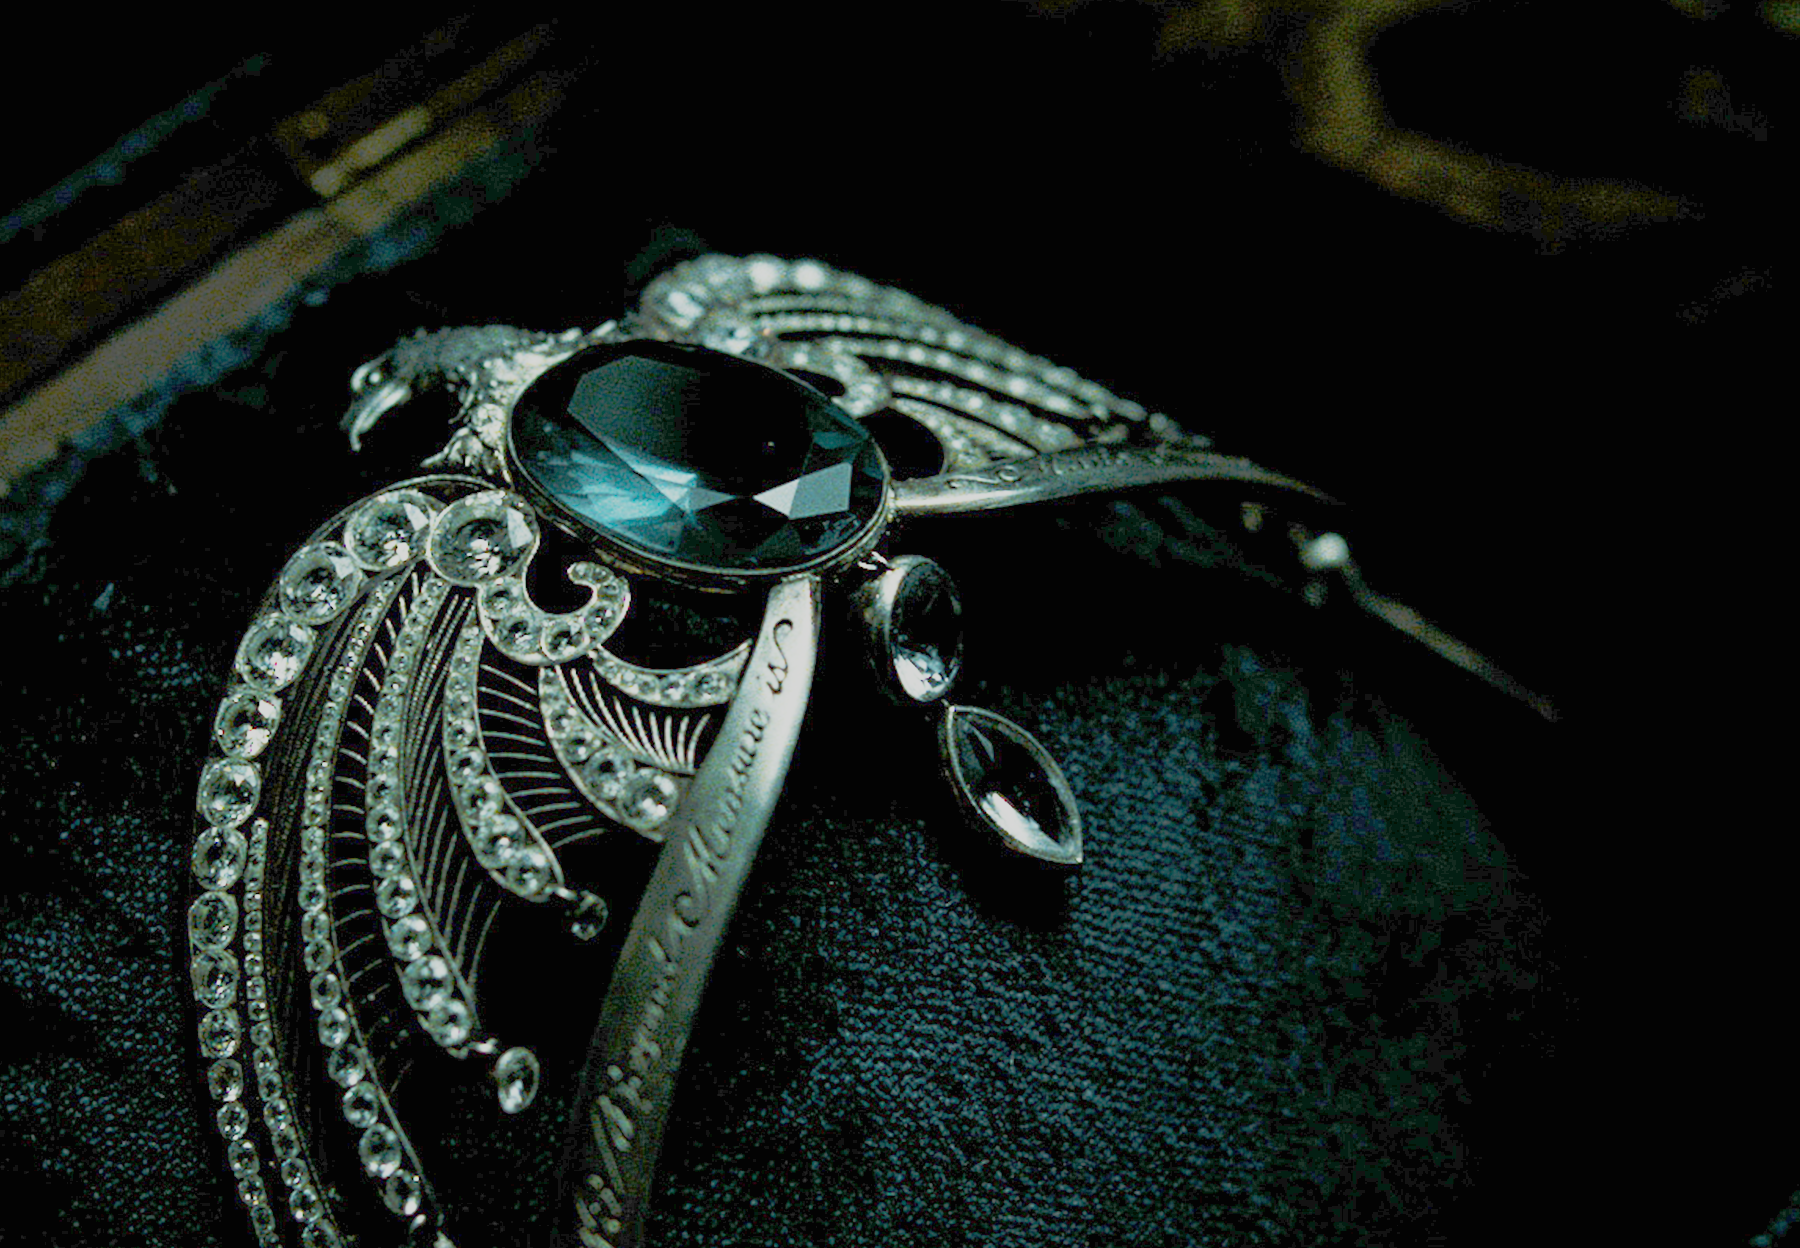 Ravenclaw's diadem